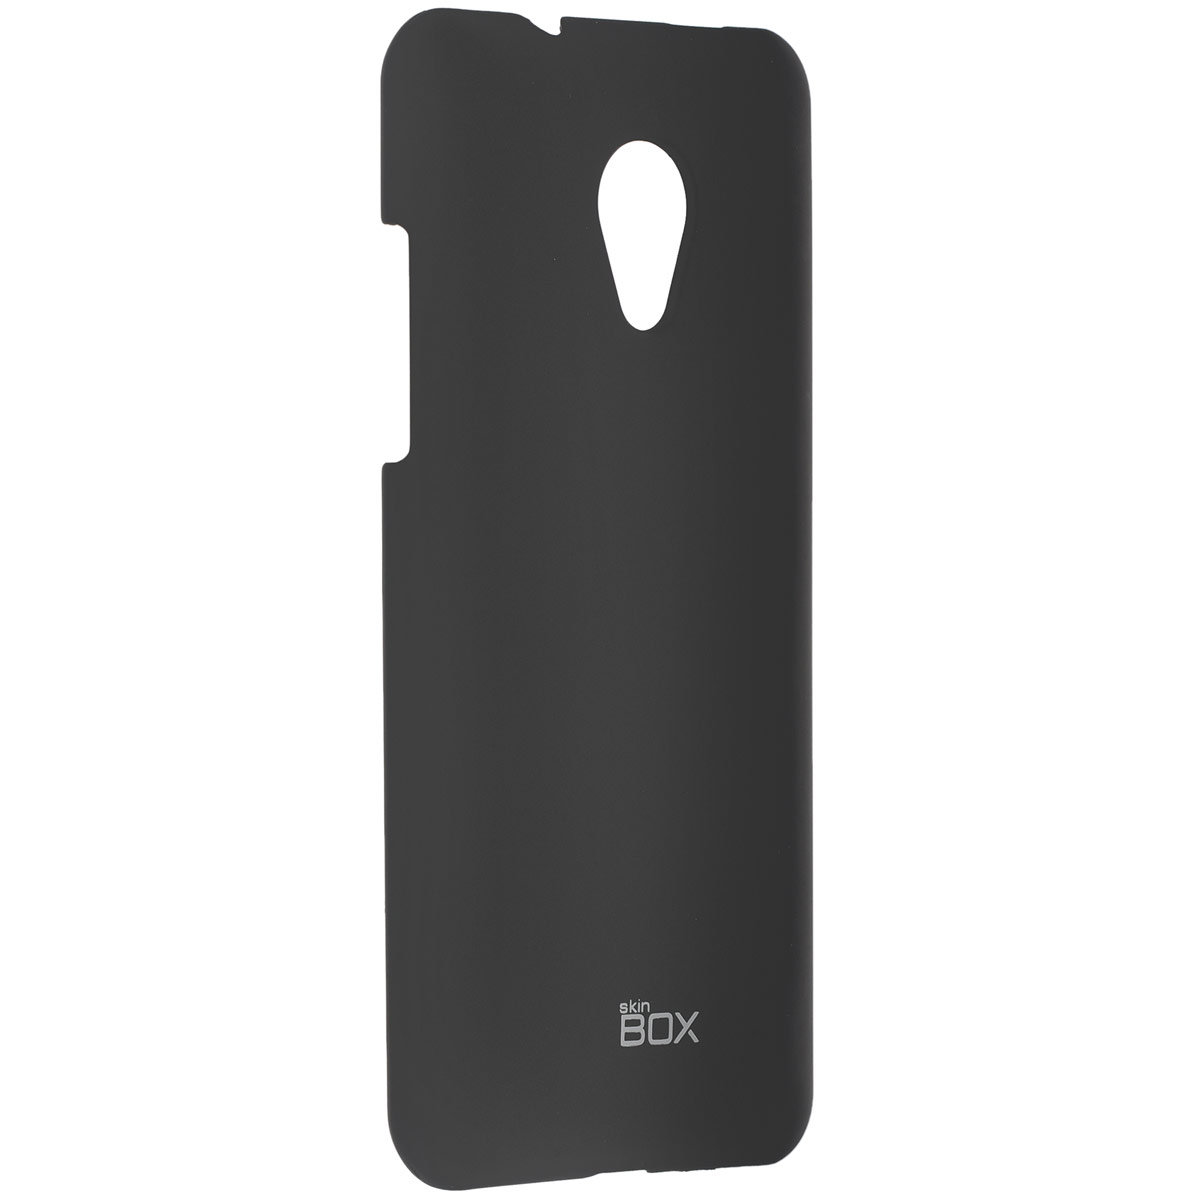 Skinbox Shield 4People   HTC Desire 700, Black - SkinboxT-S-HD700-002 Skinbox Shield 4People  HTC Desire 700             .         .         .